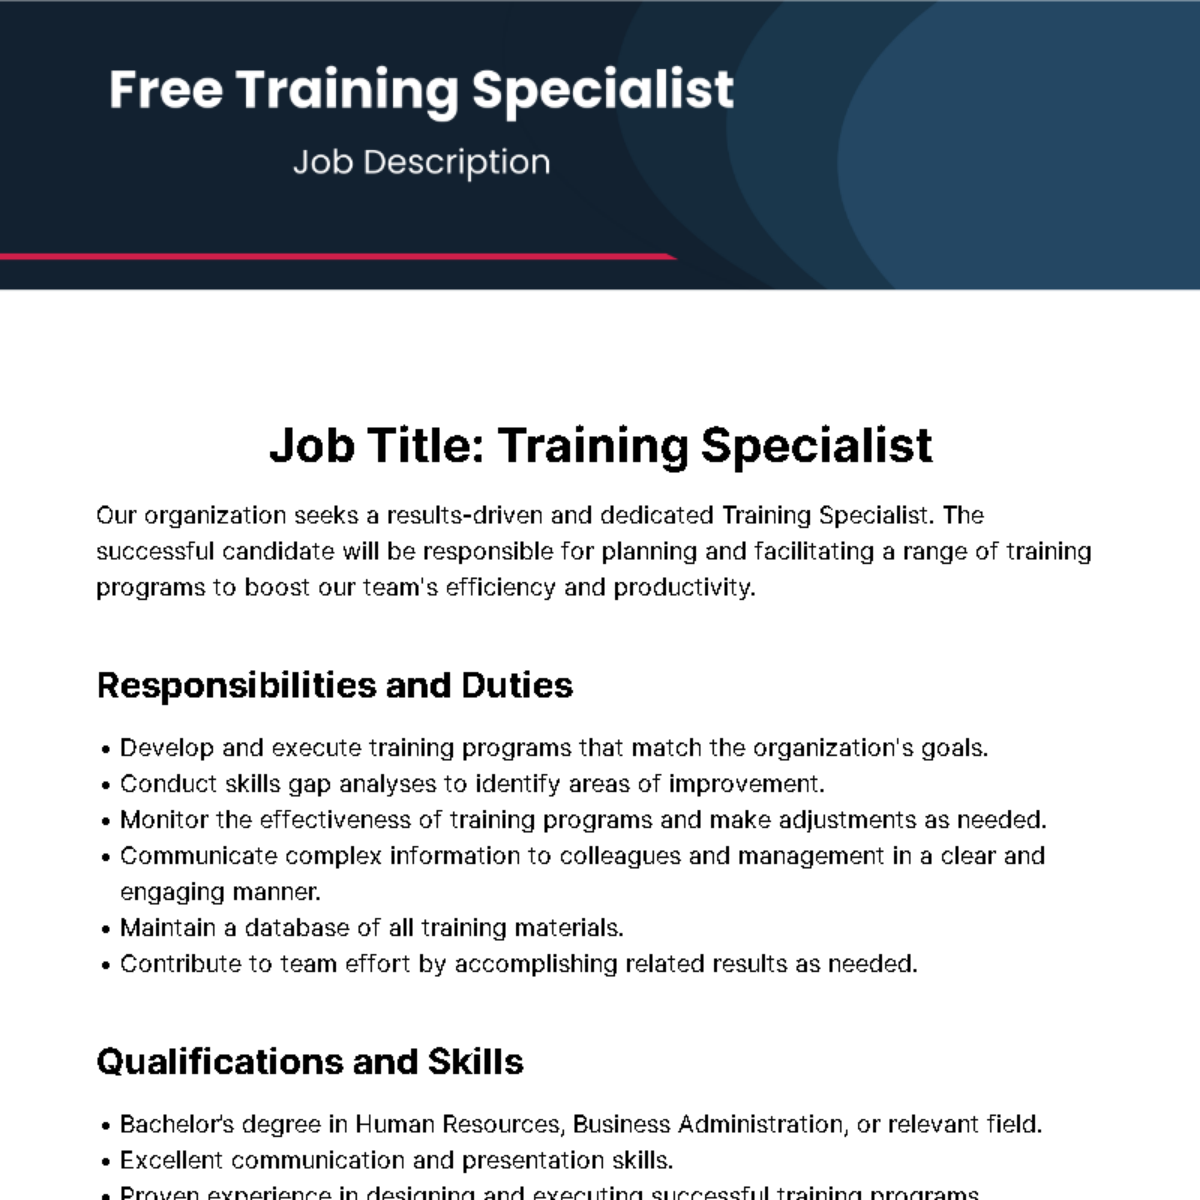 Free Training Specialist Job Description Template